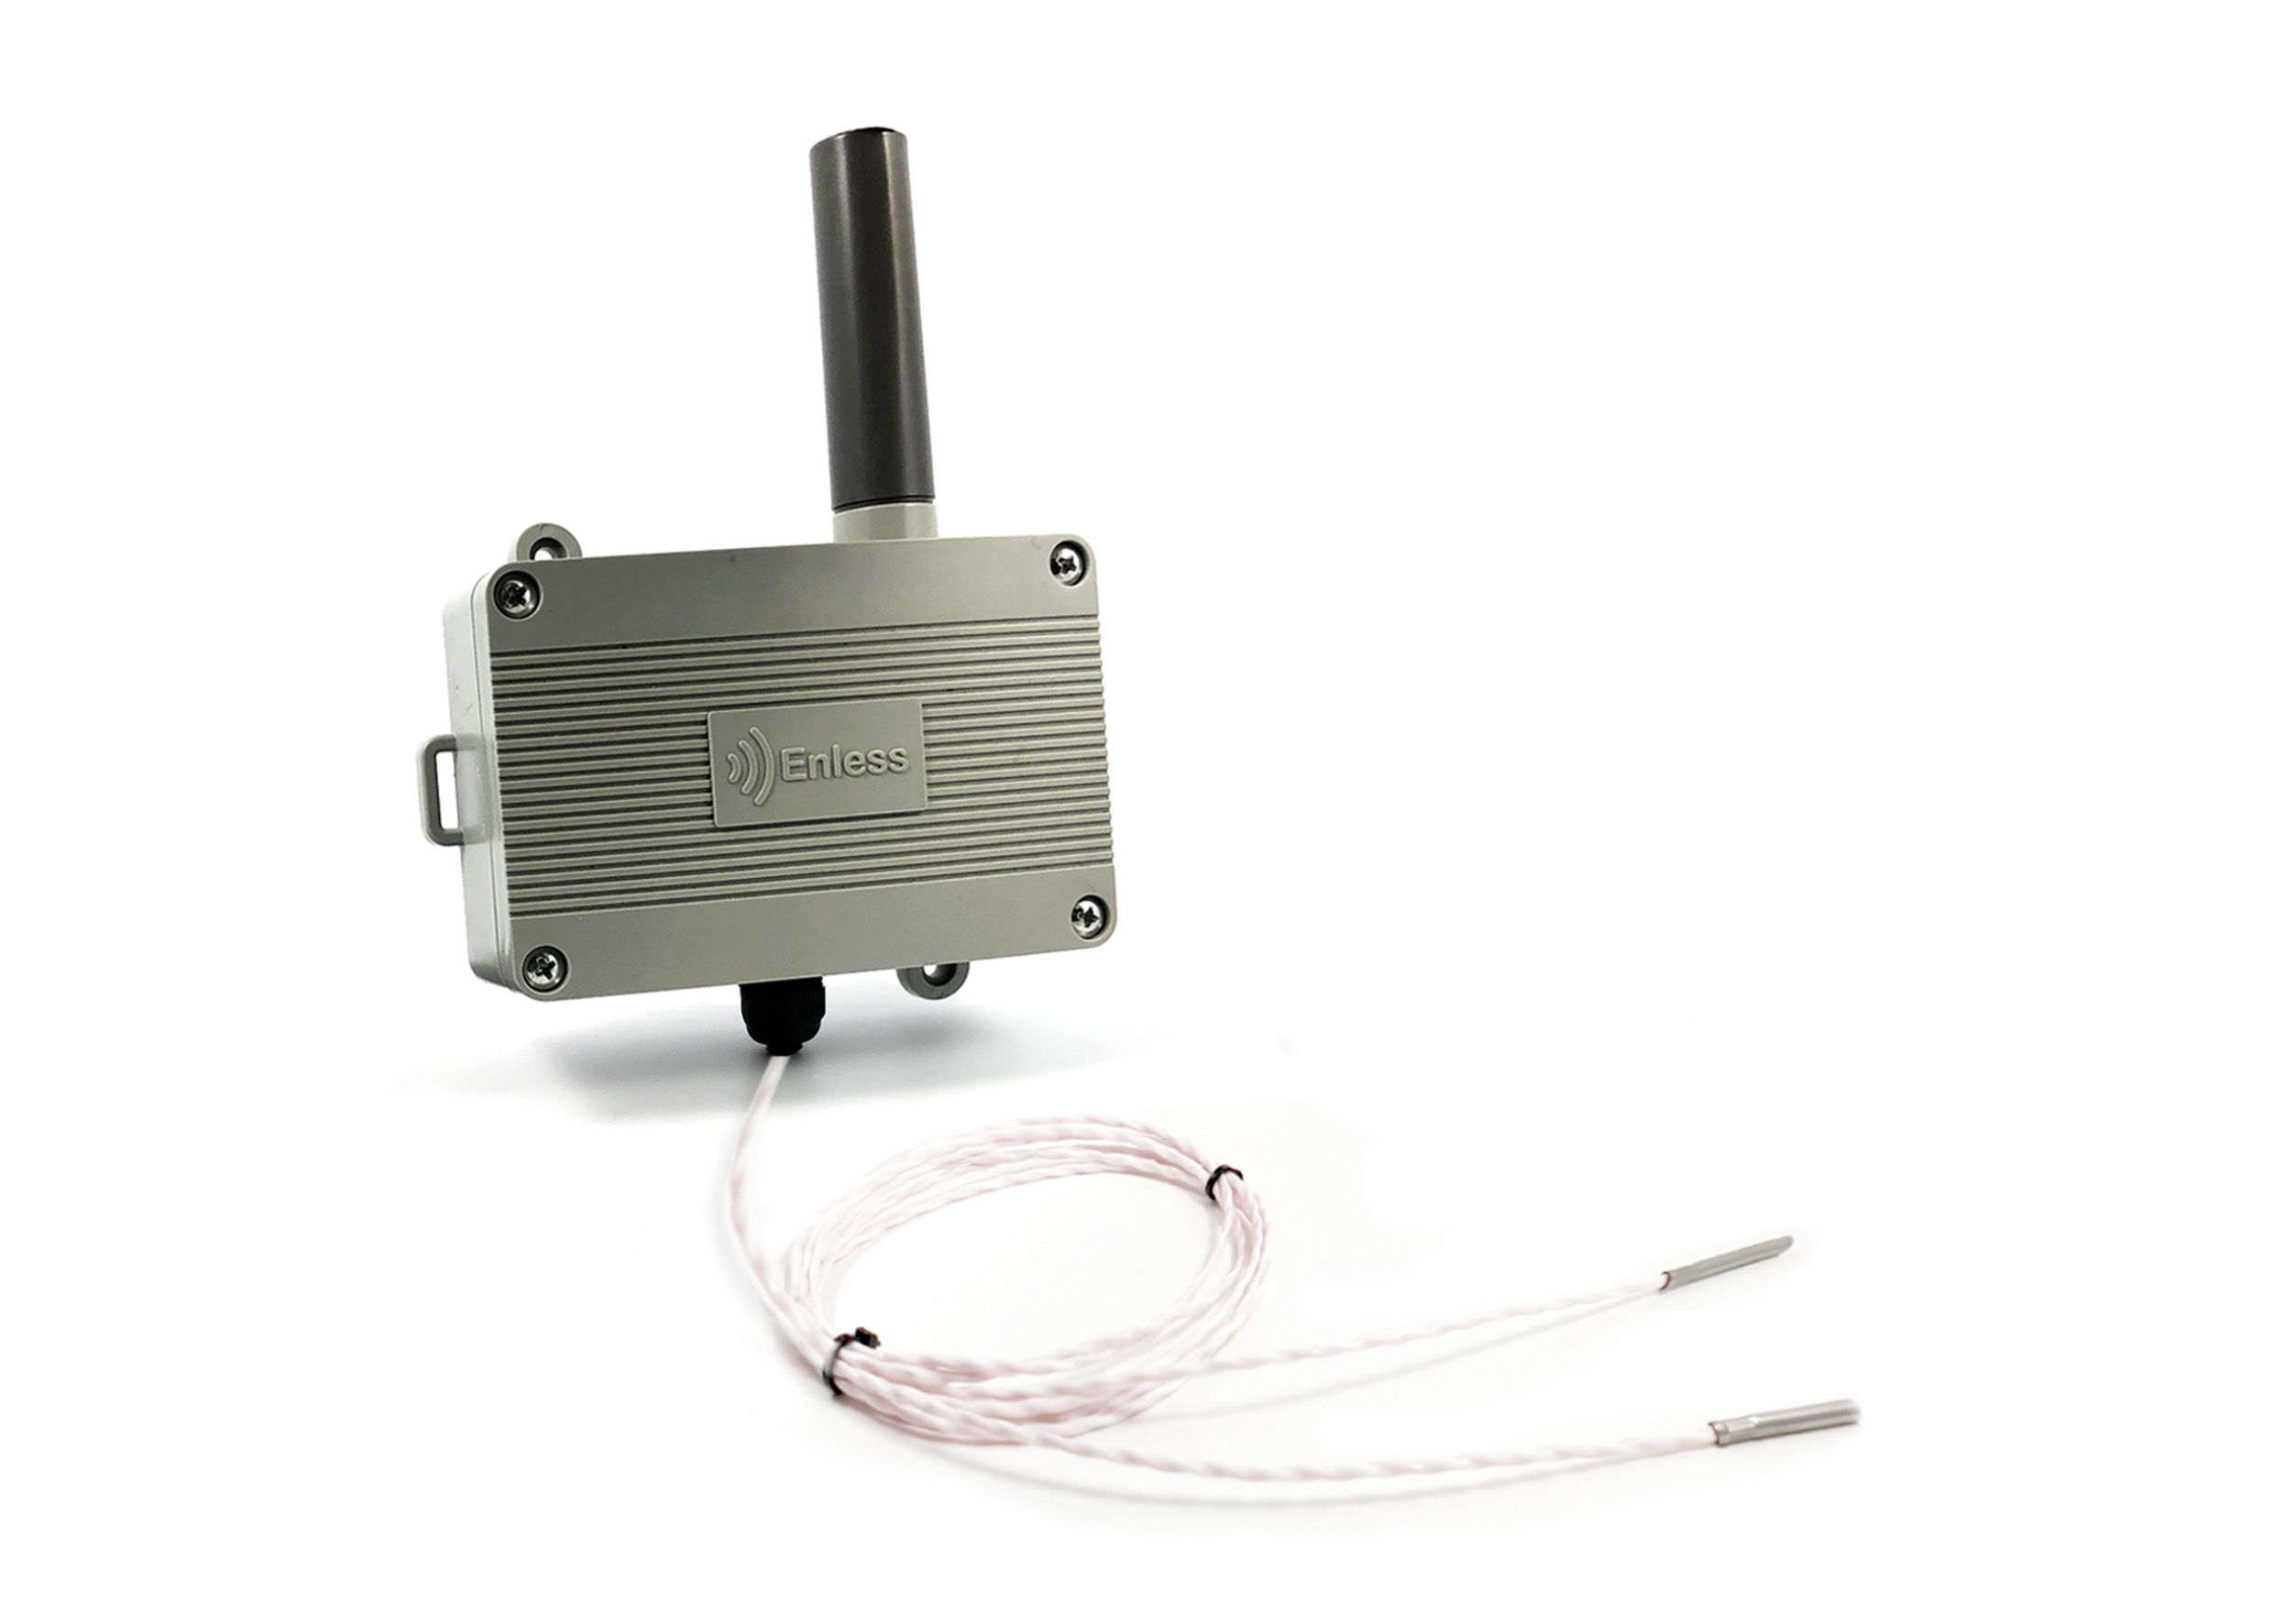 Temperature transmitter with embedded sensor, Sigfox Partner Network